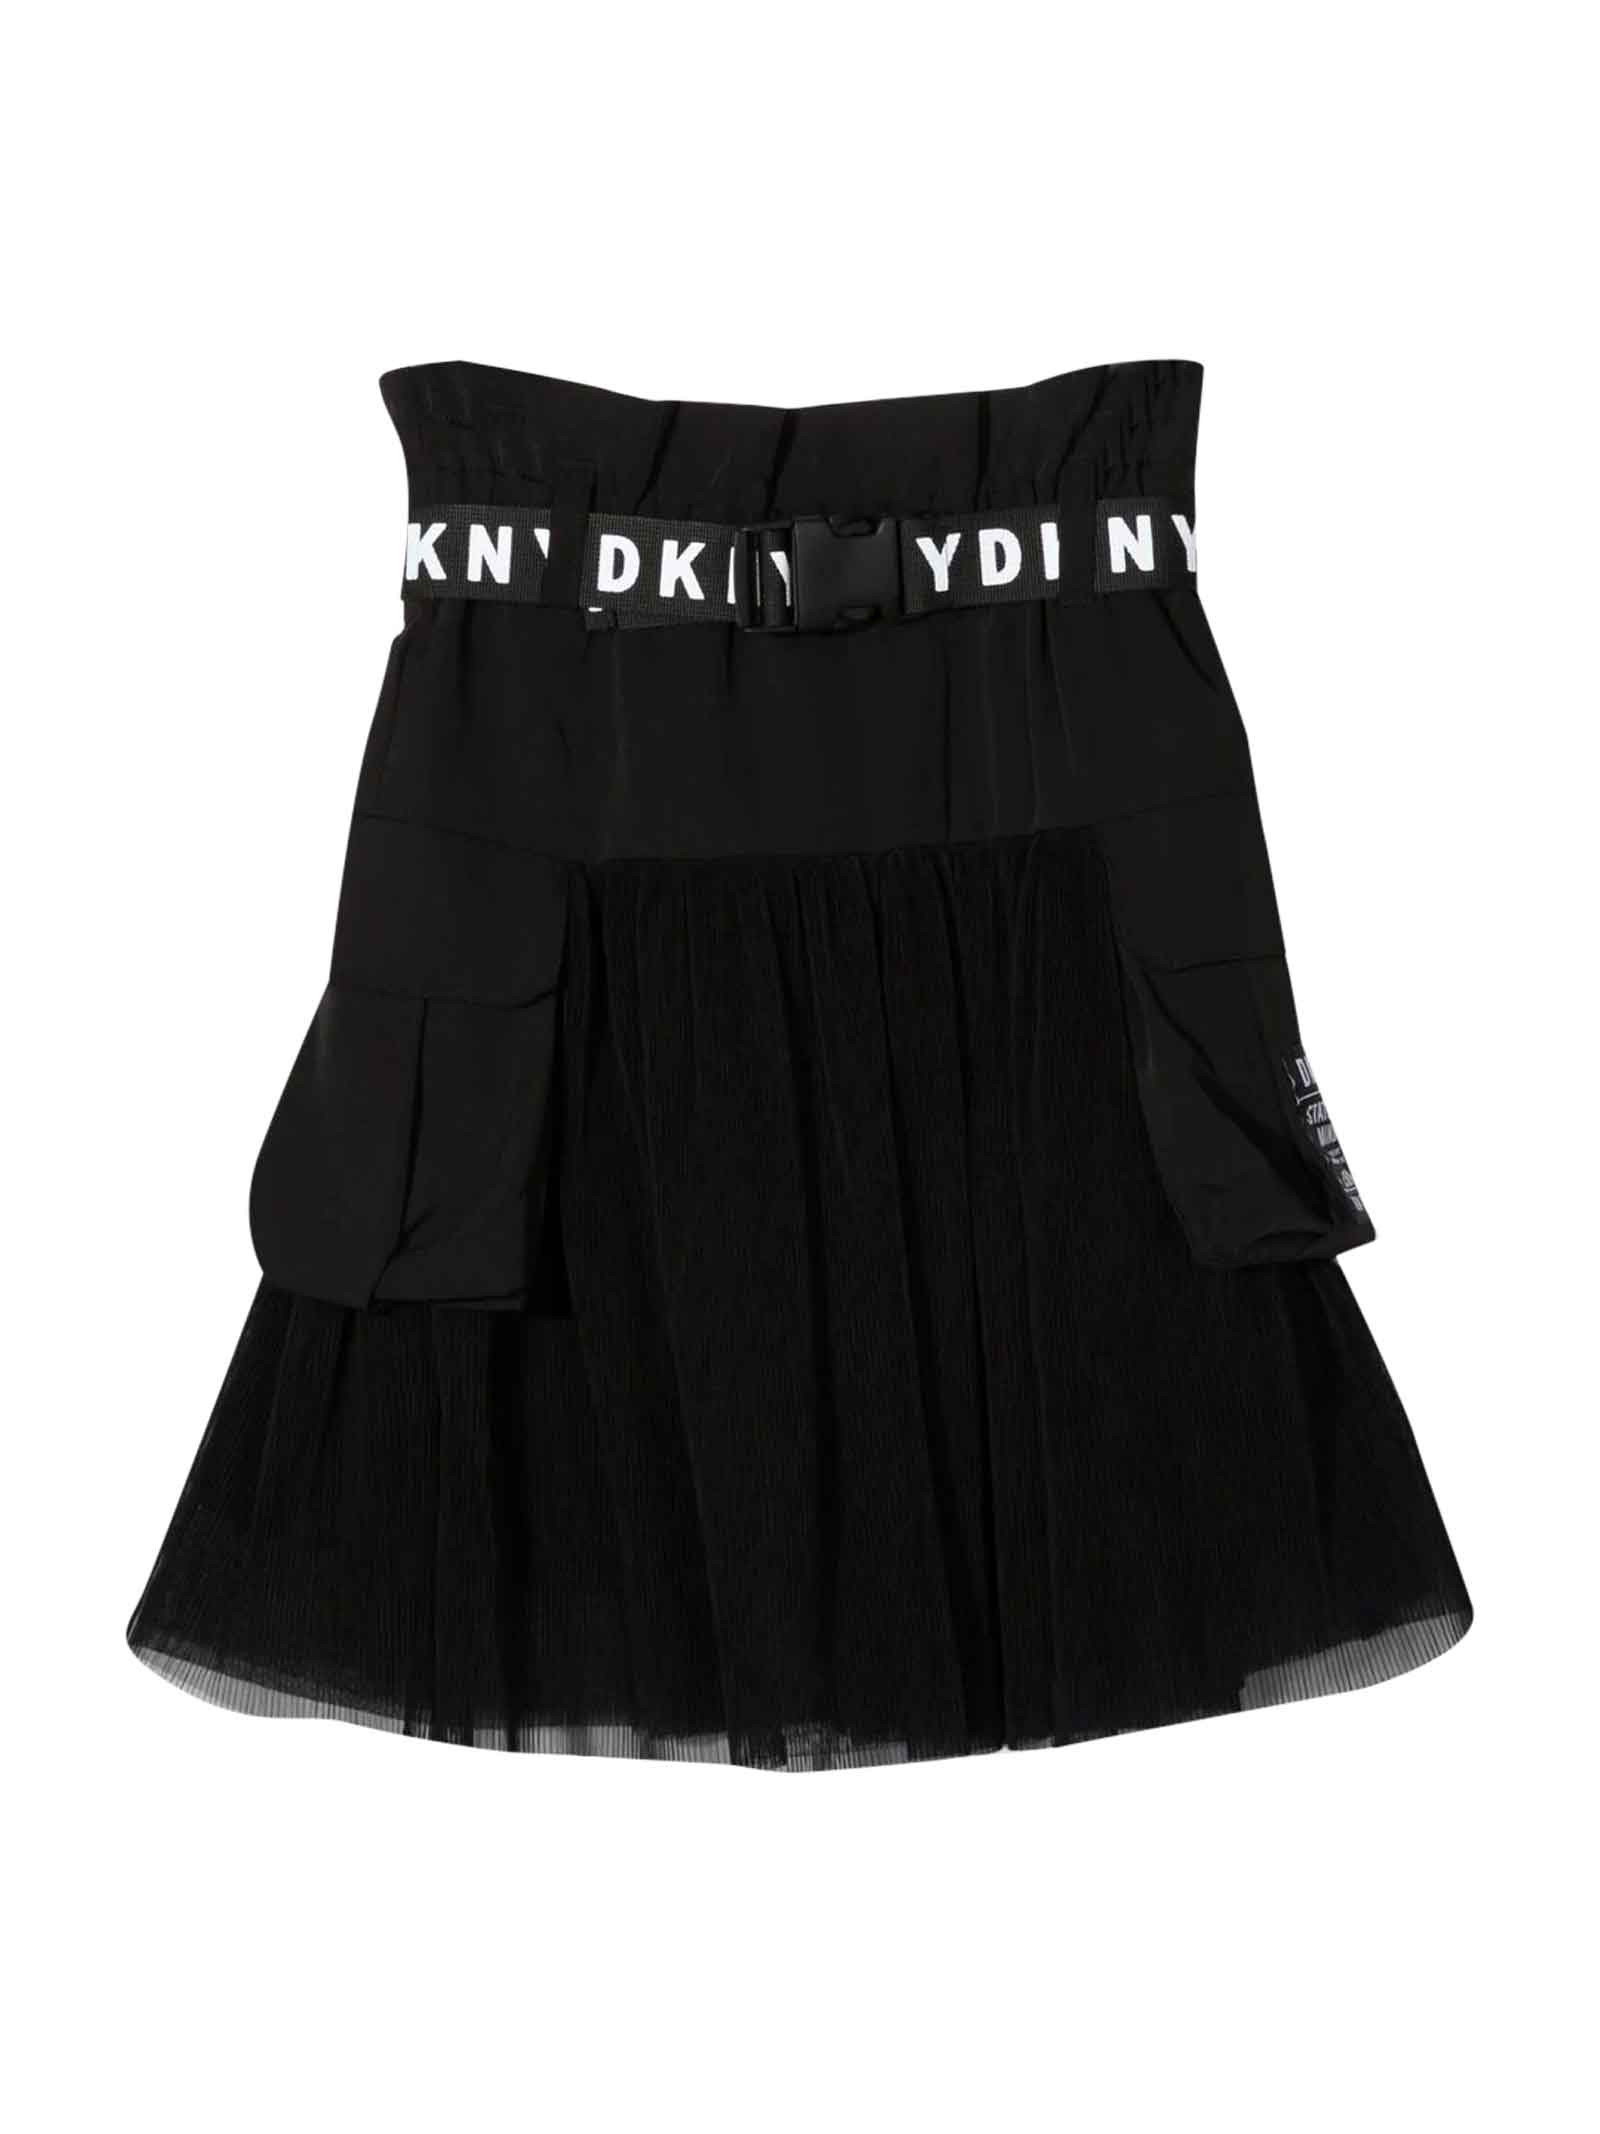 DKNY Black Skirt With Print